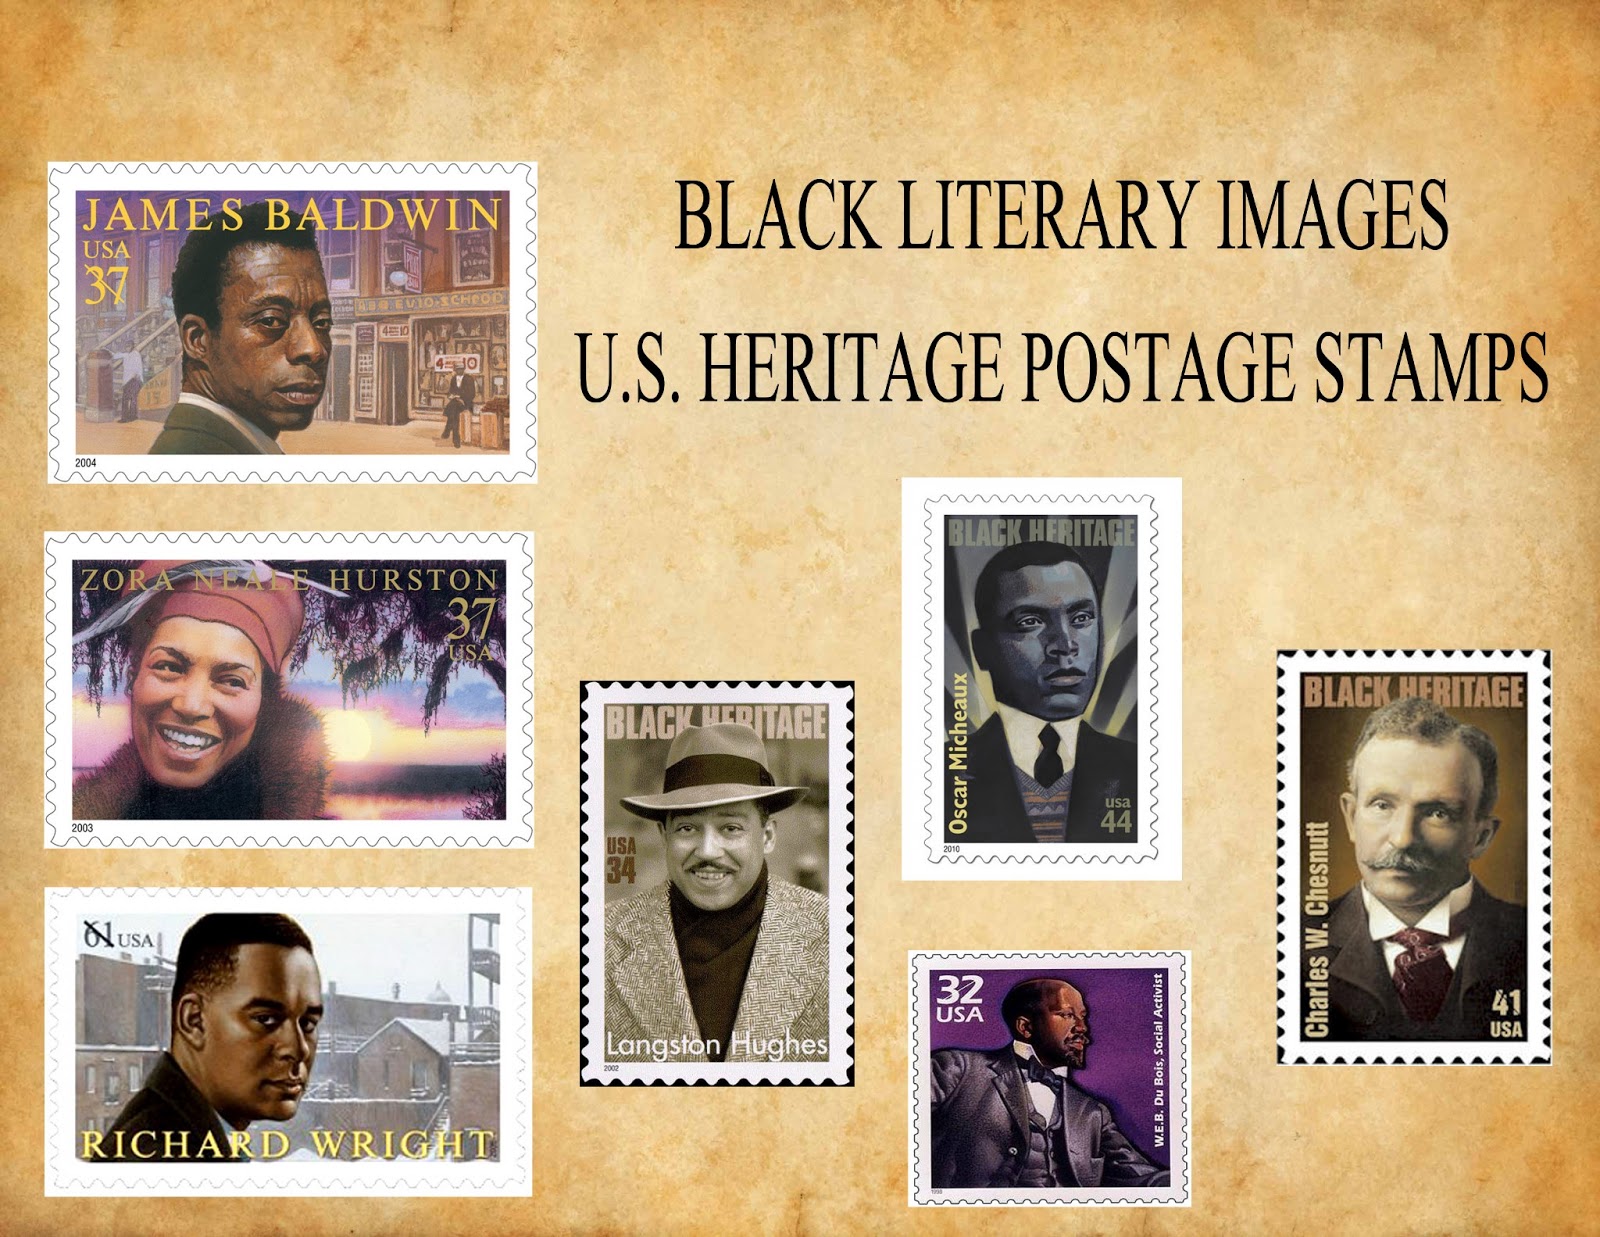 Black Literary Images U.S. Heritage Postage Stamps